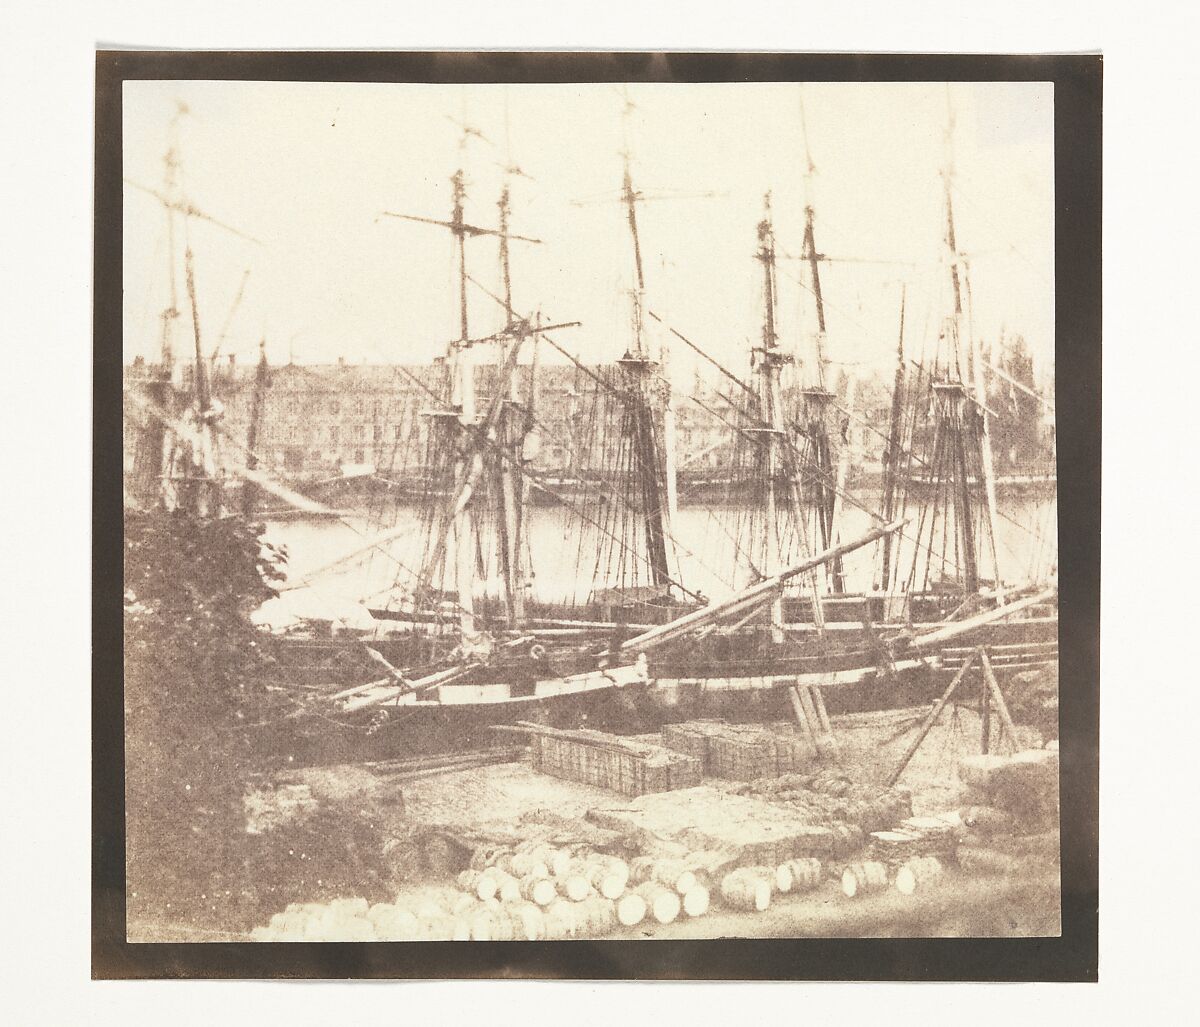 The Seine at Rouen, William Henry Fox Talbot  British, Salted paper print from paper negative